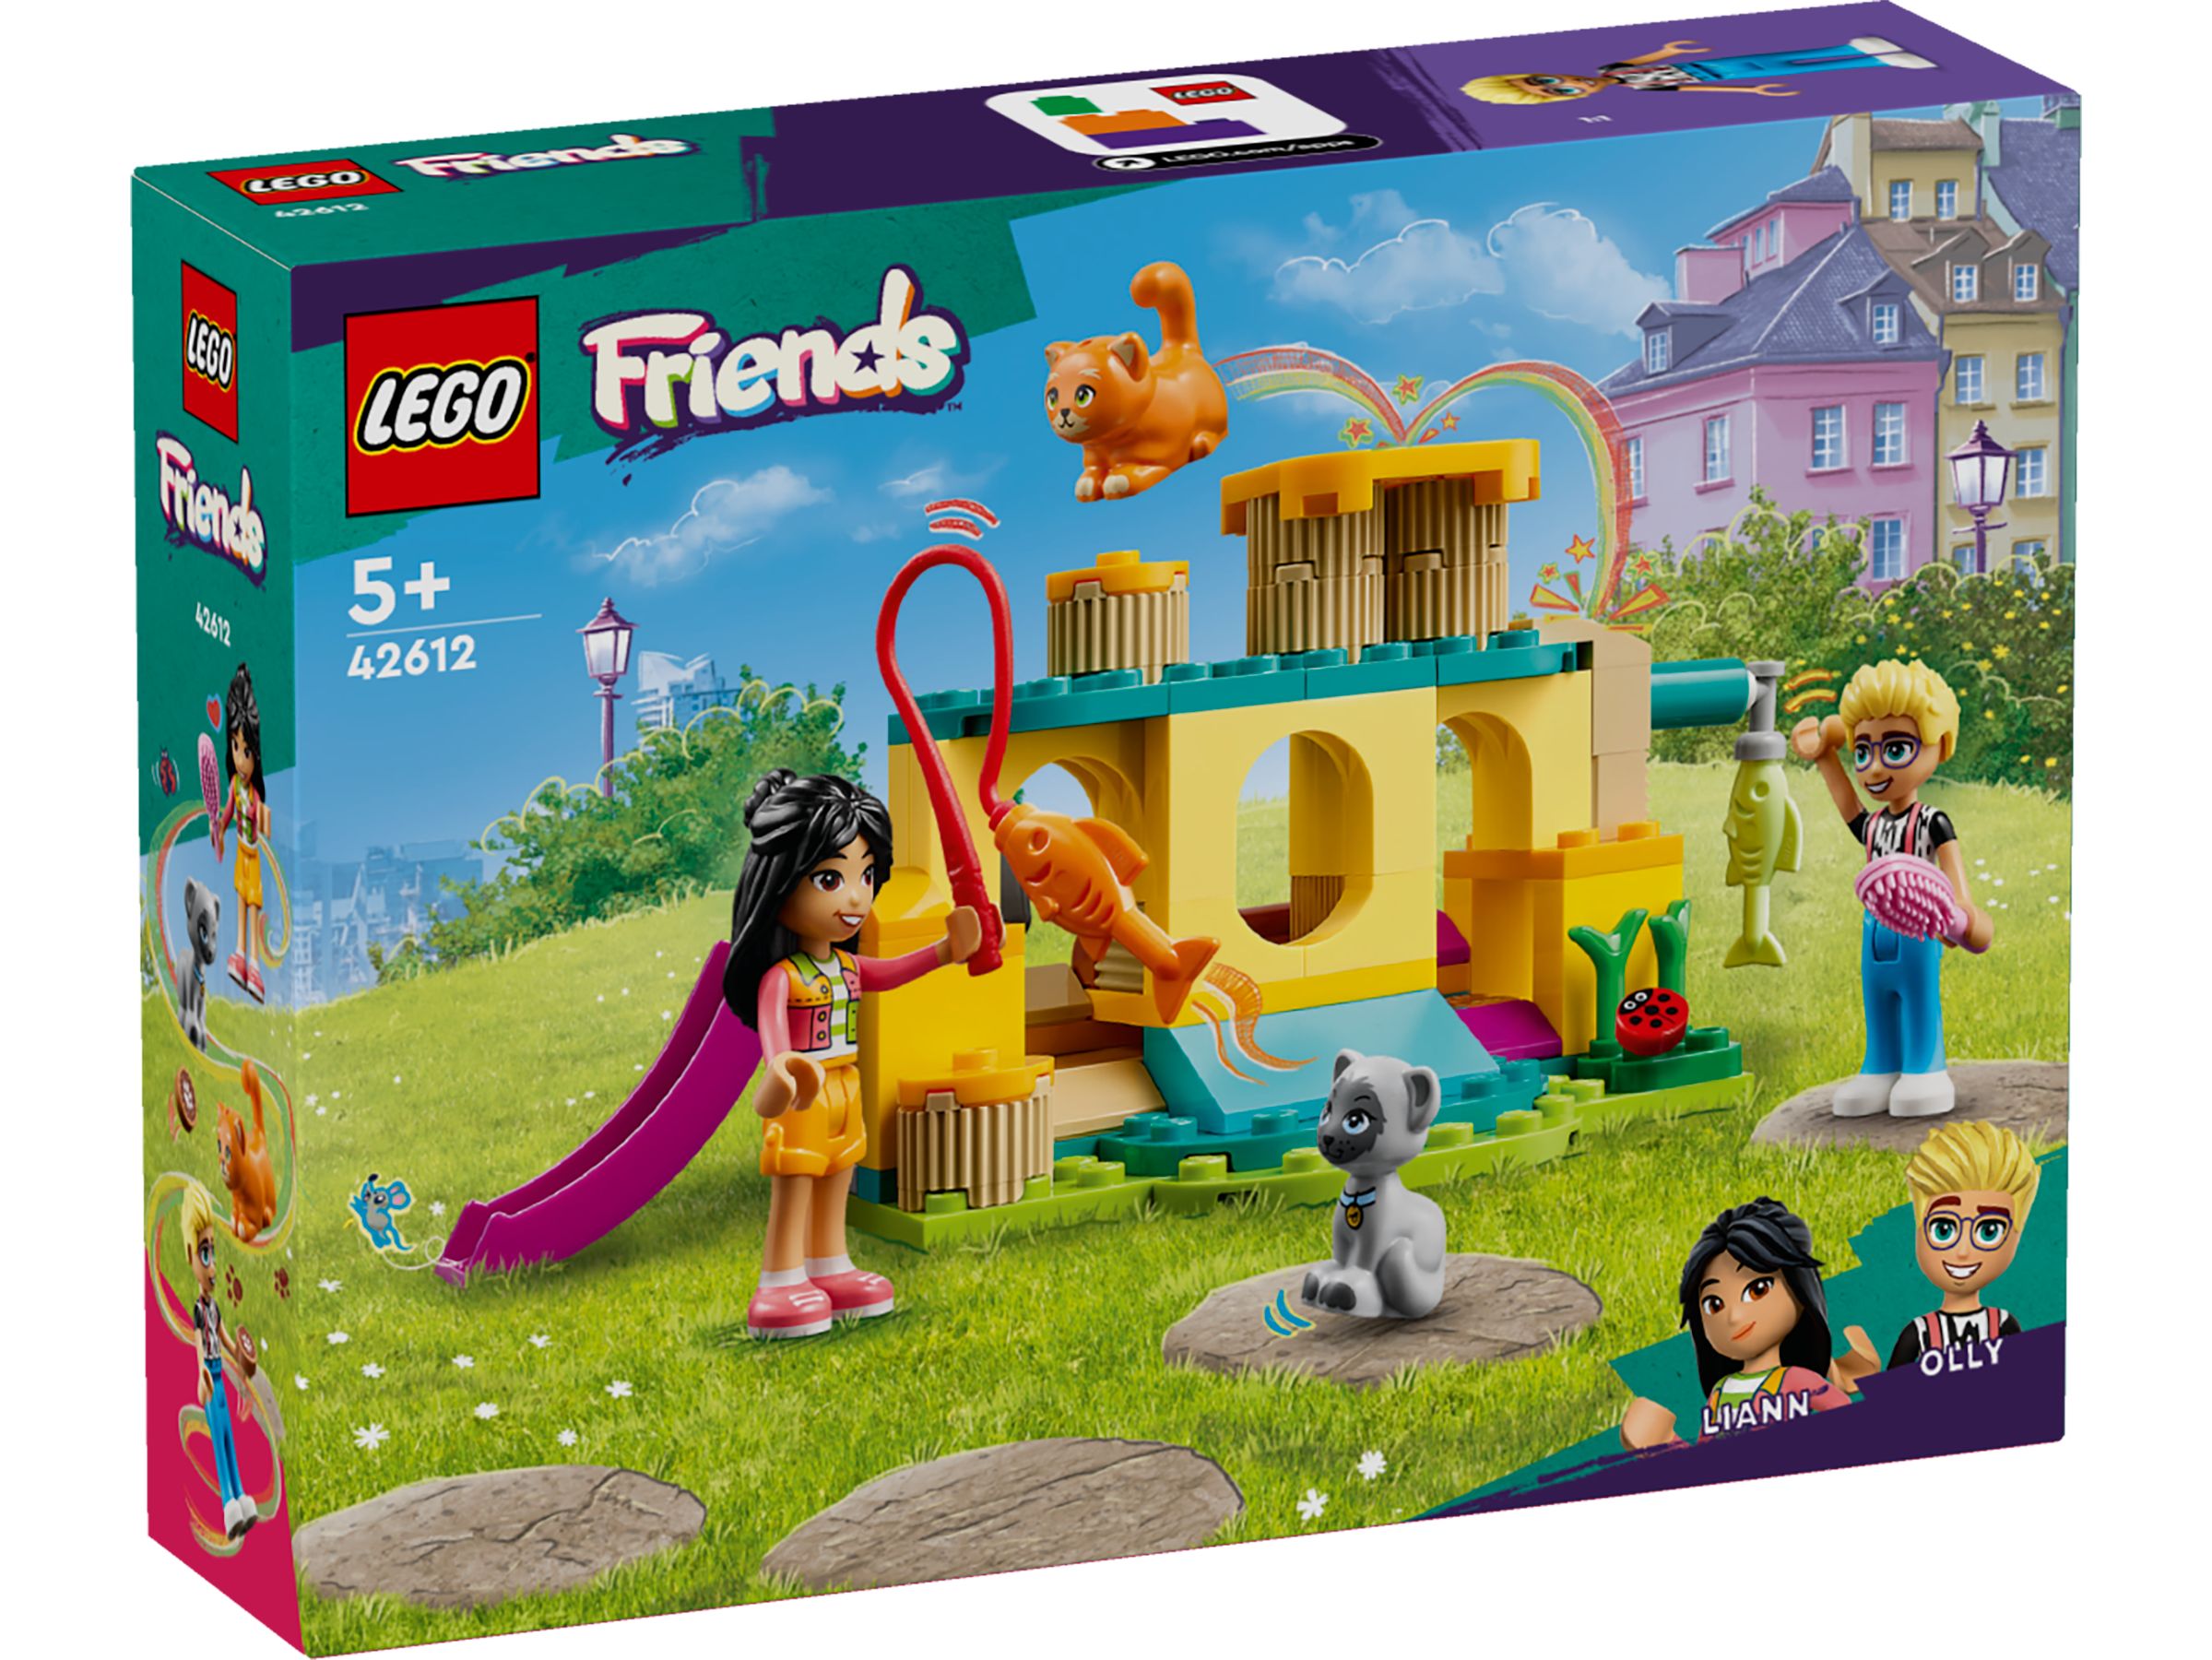 LEGO Friends 42612 Abenteuer auf dem Katzenspielplatz LEGO_42612_box1_v29.jpg